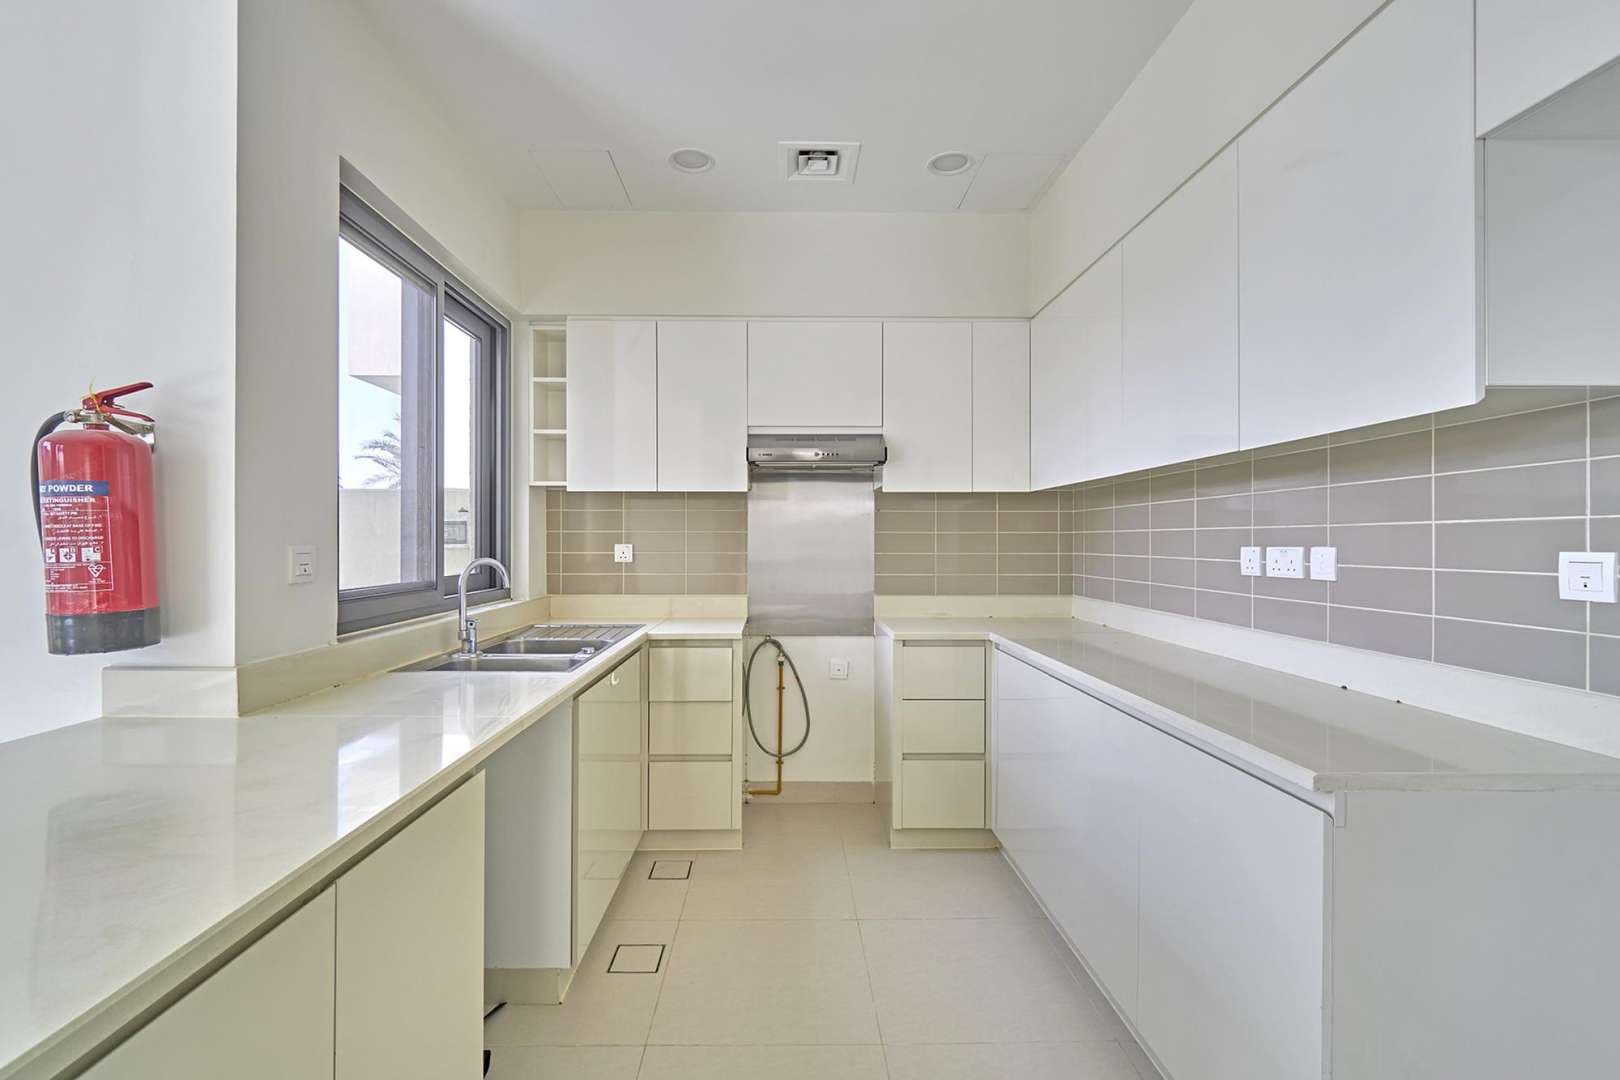 4 Bedroom Townhouse For Rent Maple At Dubai Hills Estate Lp05957 9c4214bafb83800.jpg